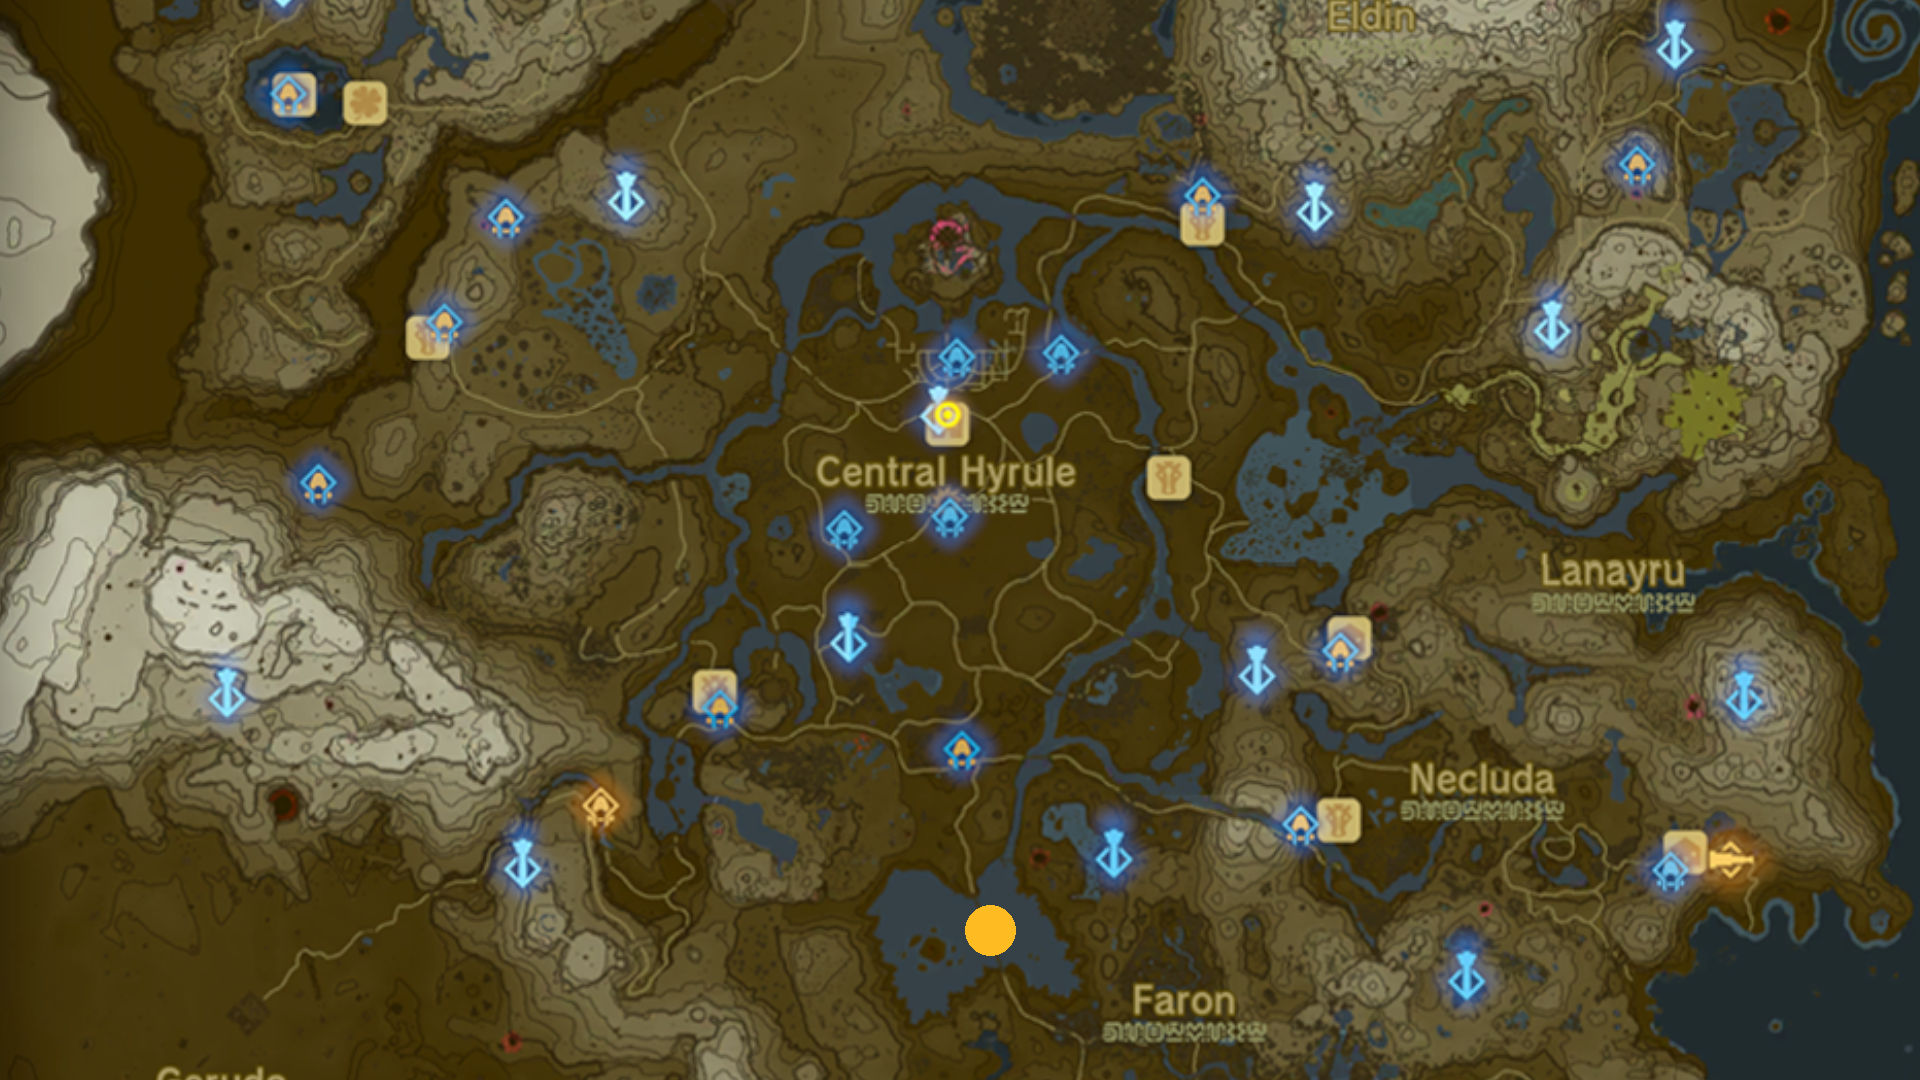 Zelda: Tears of the Kingdom - All Gleeok and King Gleeok Locations